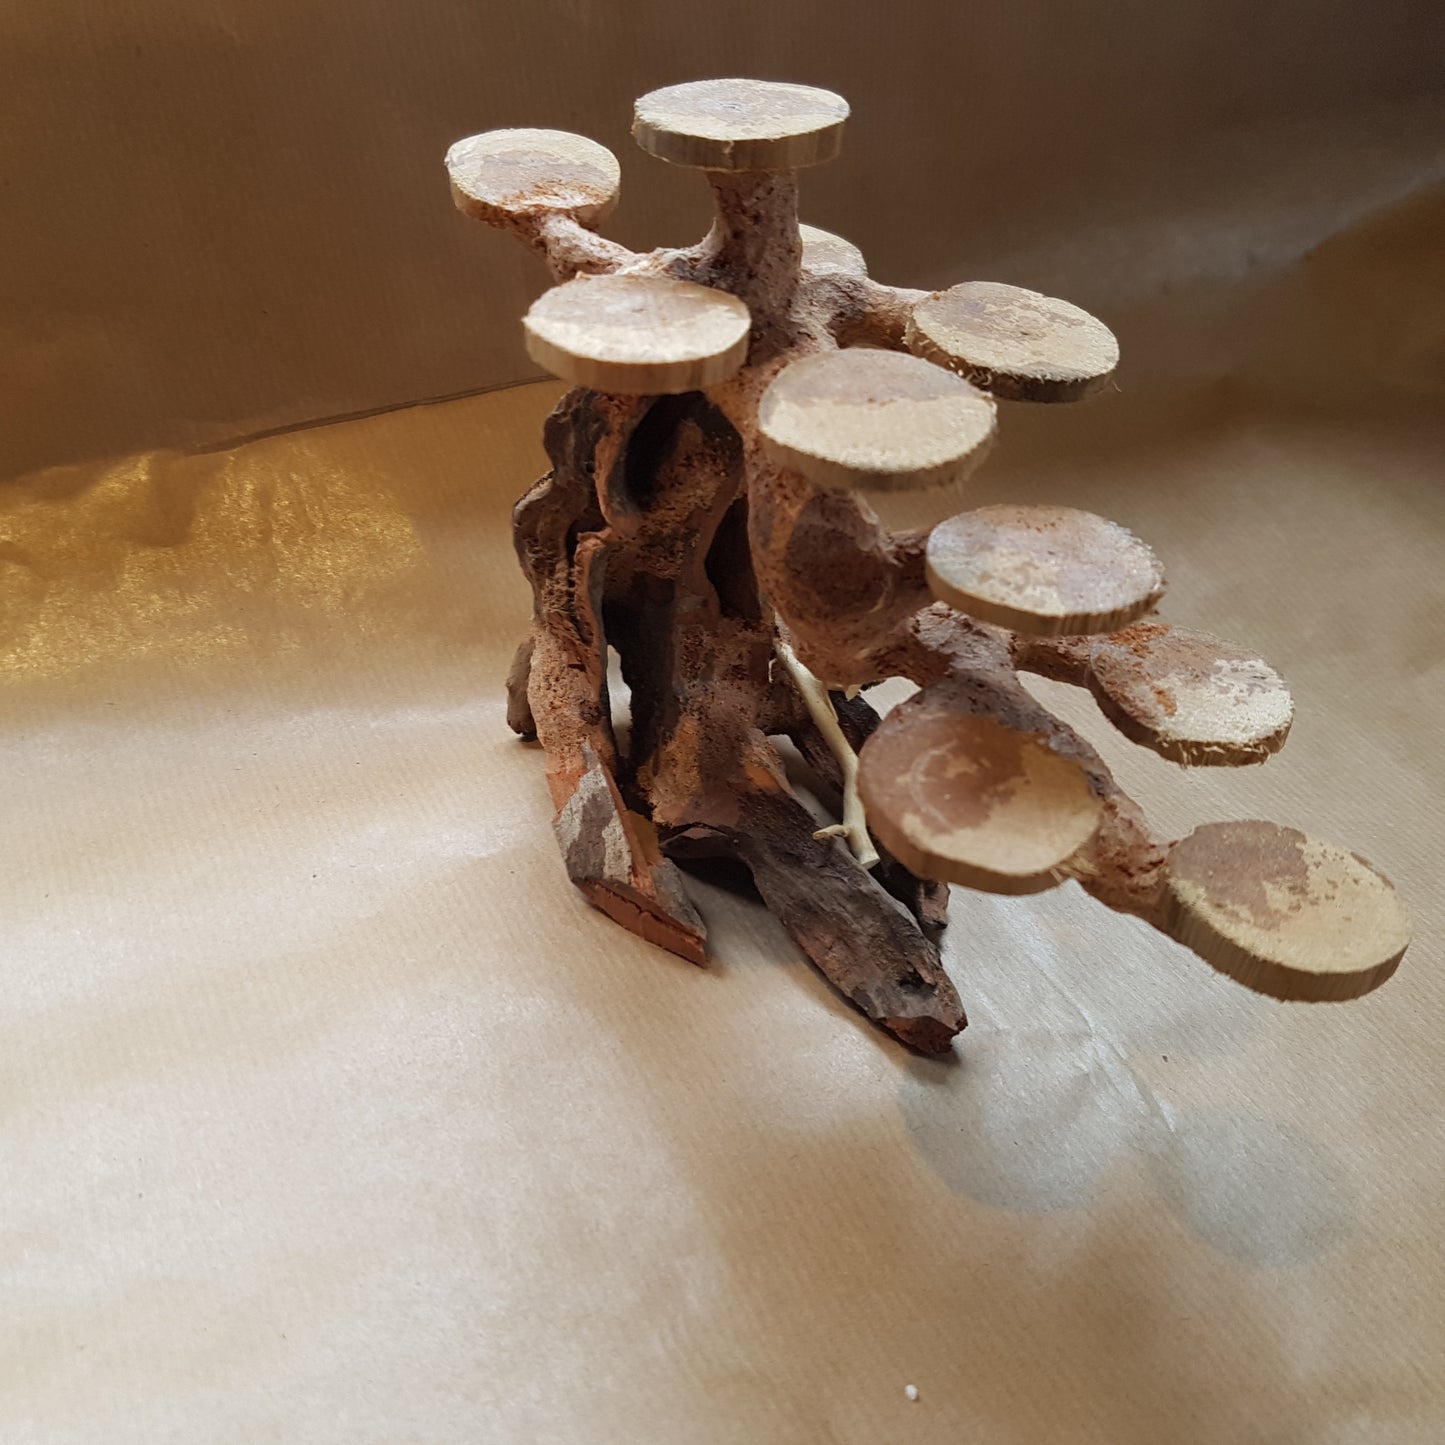 Aquarium wood/resin bonsai tree decoration with planting plates